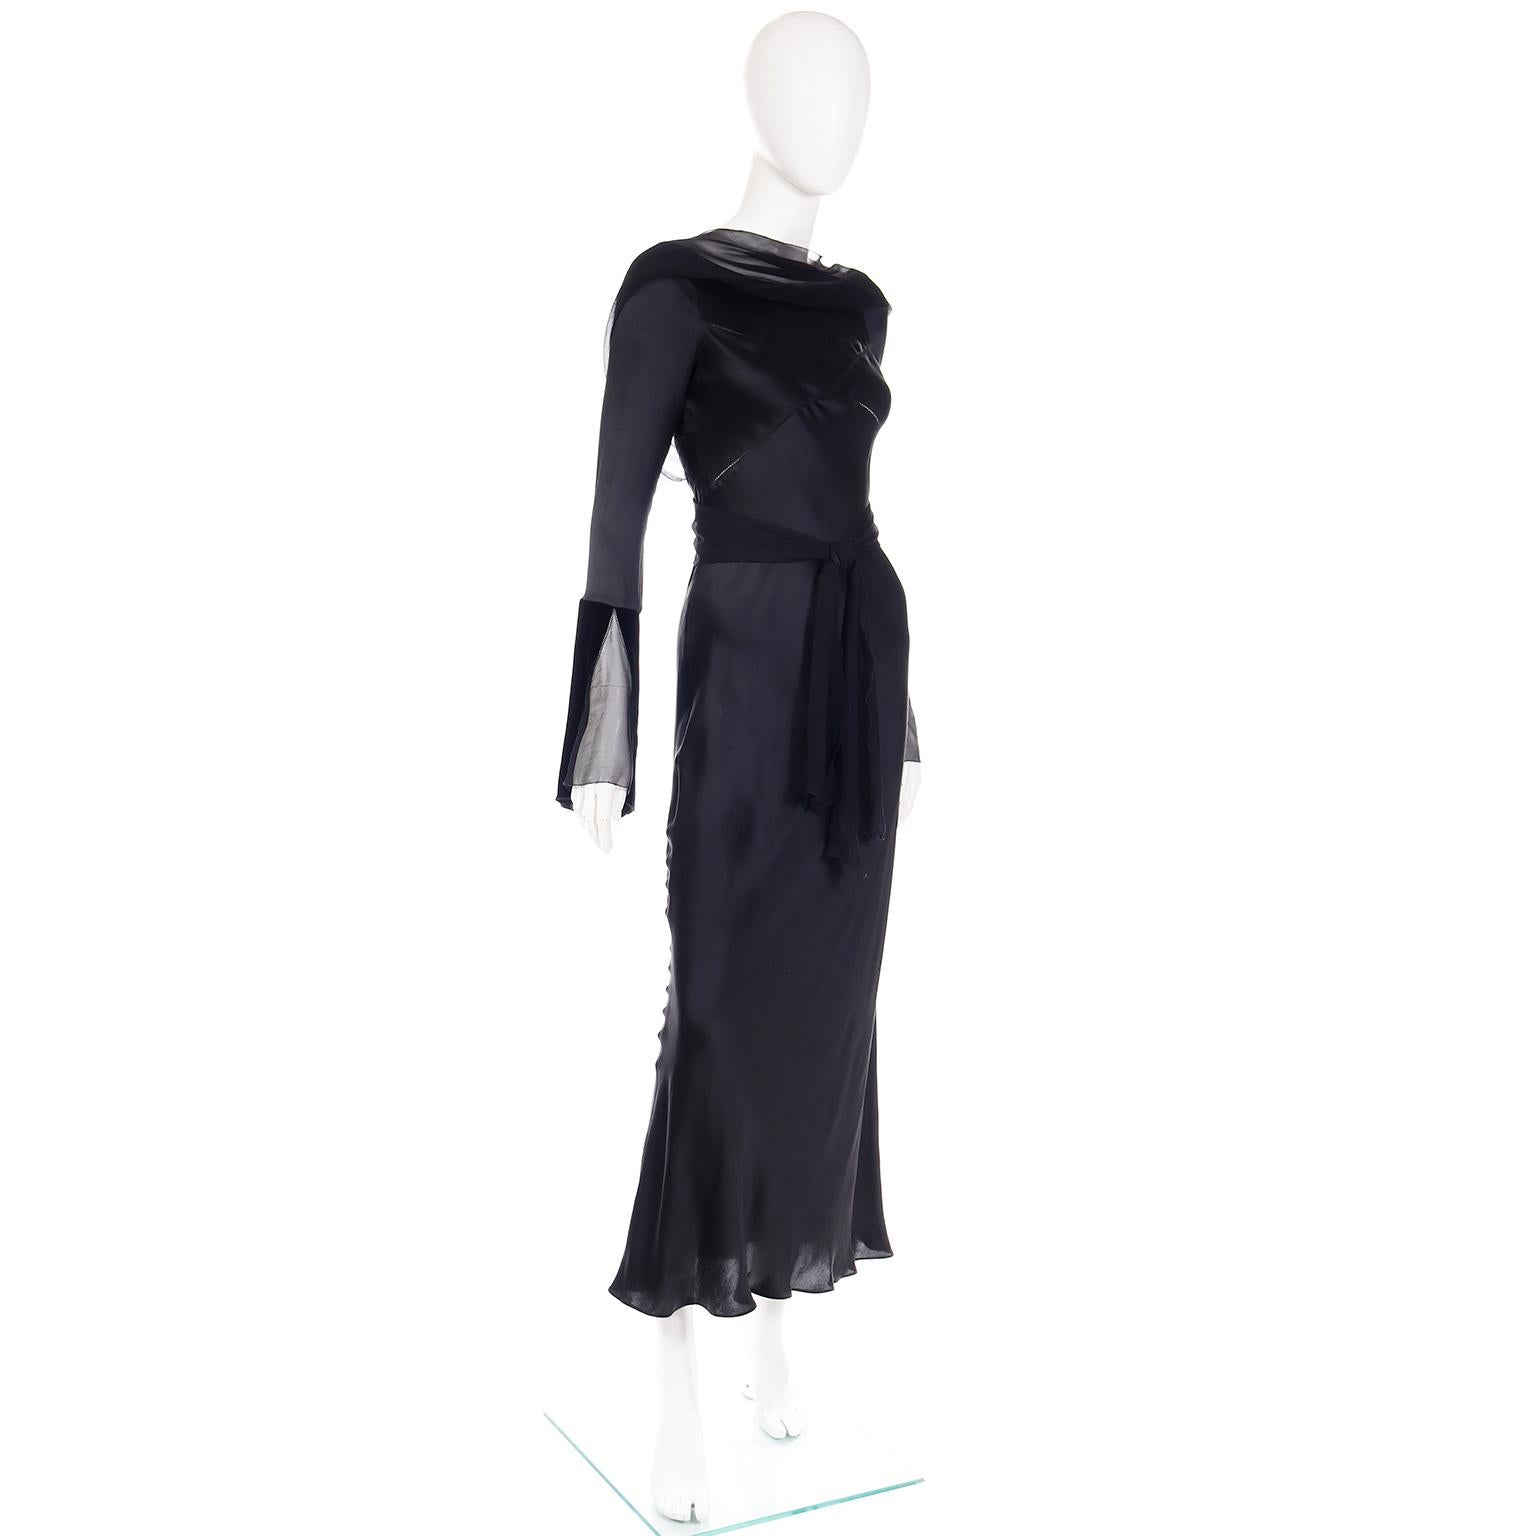 Women's Alberta Ferretti 1990s Vintage Black Silk Evening Gown Dress W Statement Sleeves